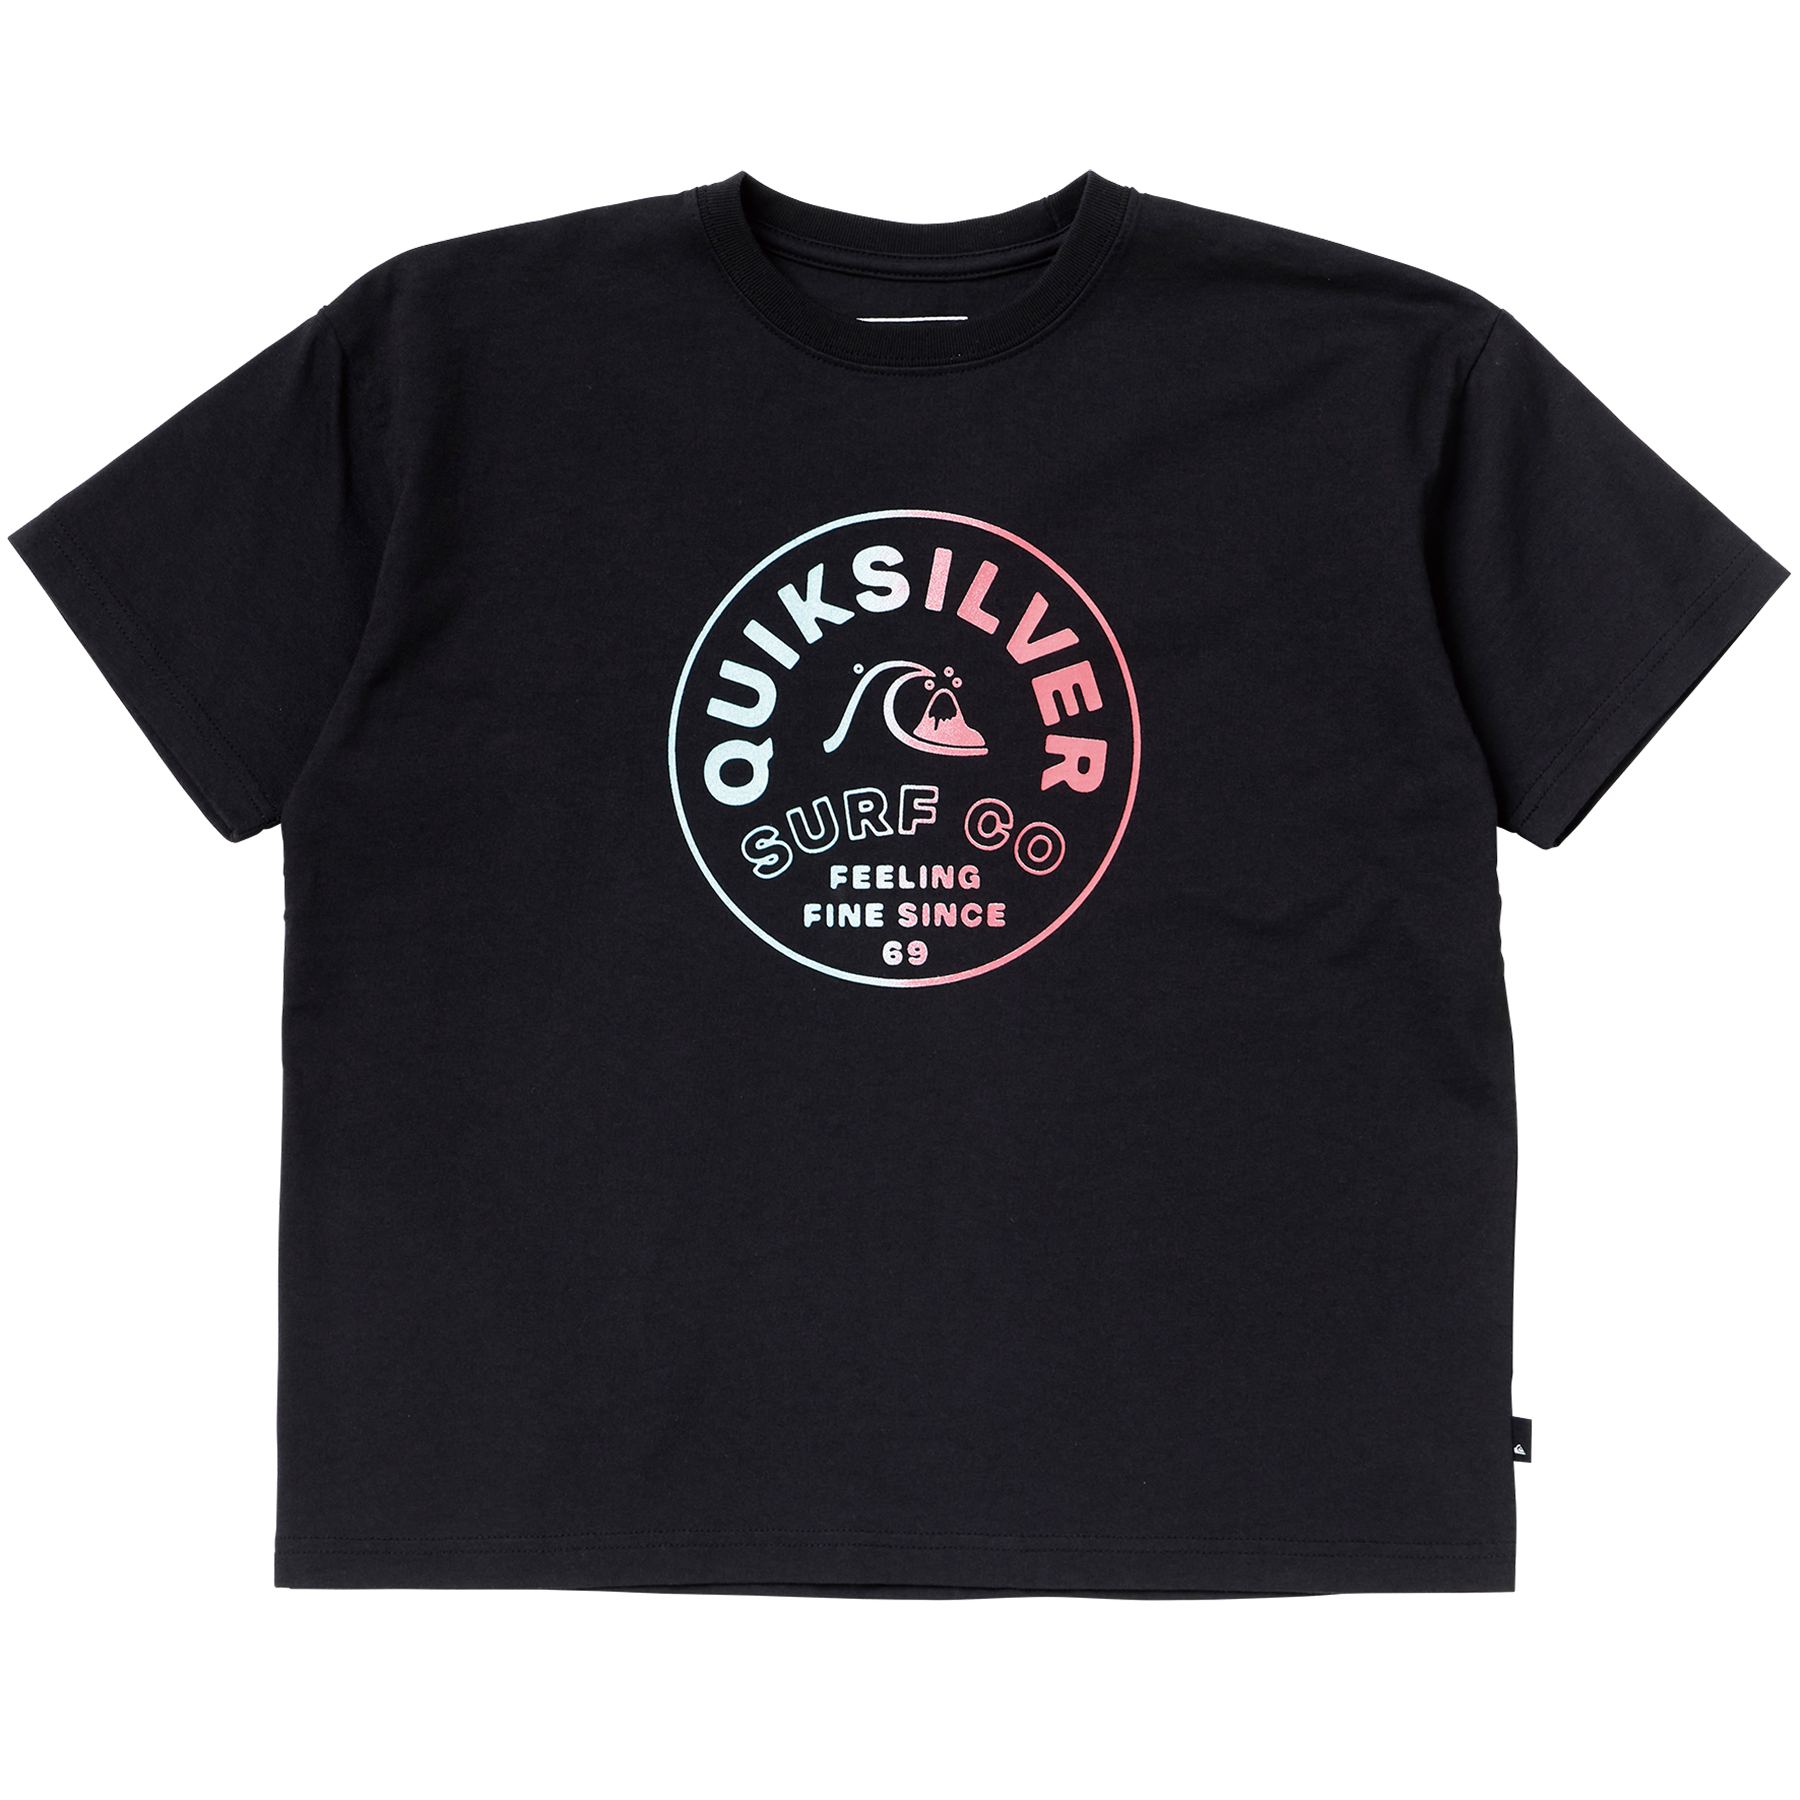 30%OFF セール SALE Quiksilver クイックシルバー TIMELESS ST YOUTH Tシャツ キッズ Tシャツ ティーシャツ